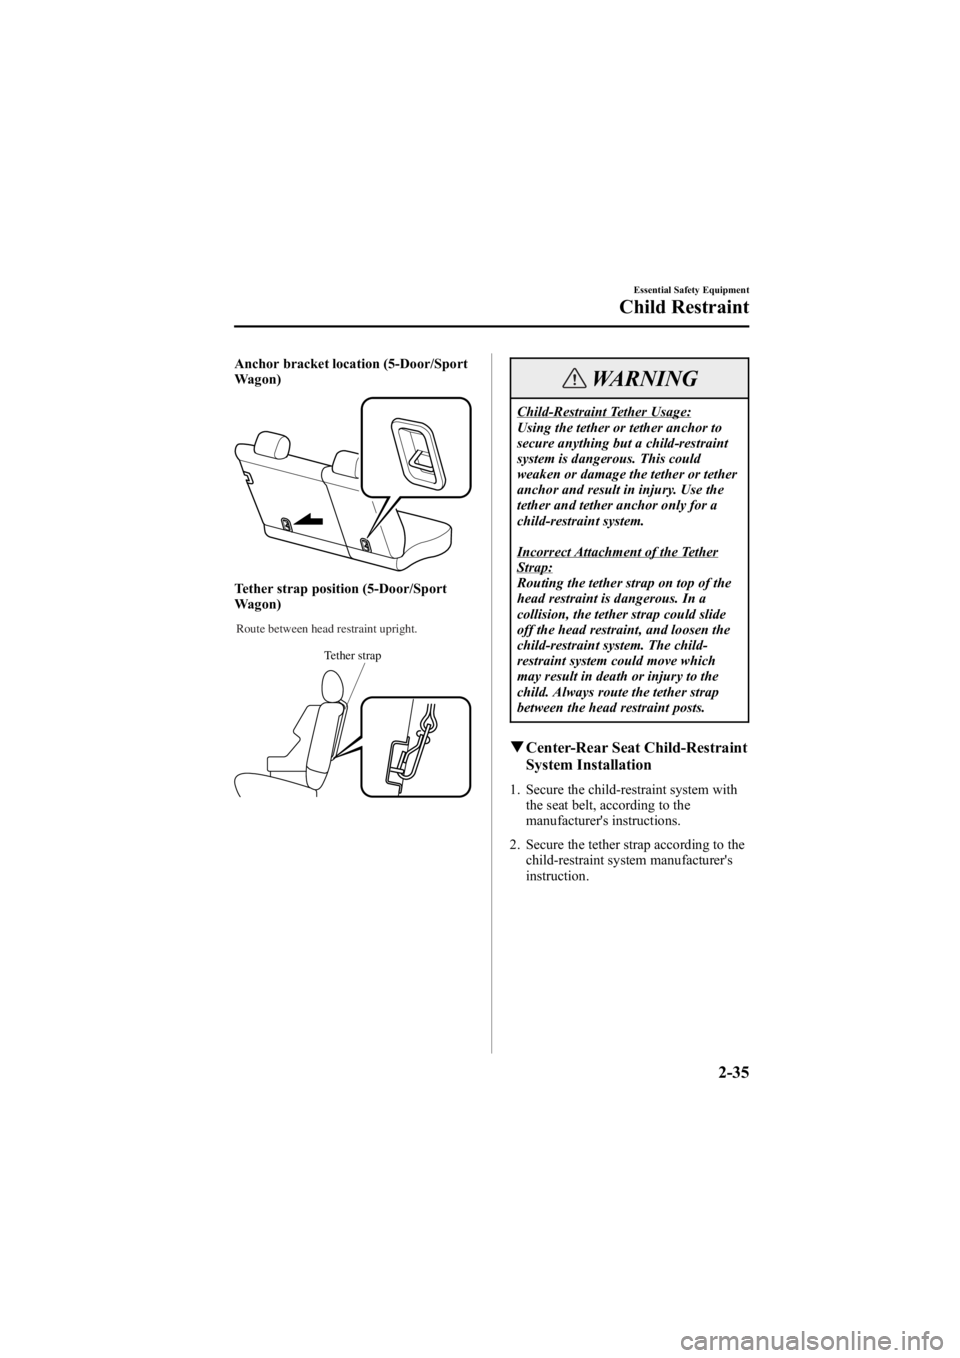 MAZDA MODEL 6 SPORT WAGON 2006 Service Manual Black plate (49,1)
Anchor bracket location (5-Door/Sport
Wagon)
Tether strap position (5-Door/Sport
Wagon)
Tether strap
Route between head restraint upright.
WARNING
Child-Restraint Tether Usage:
Usin